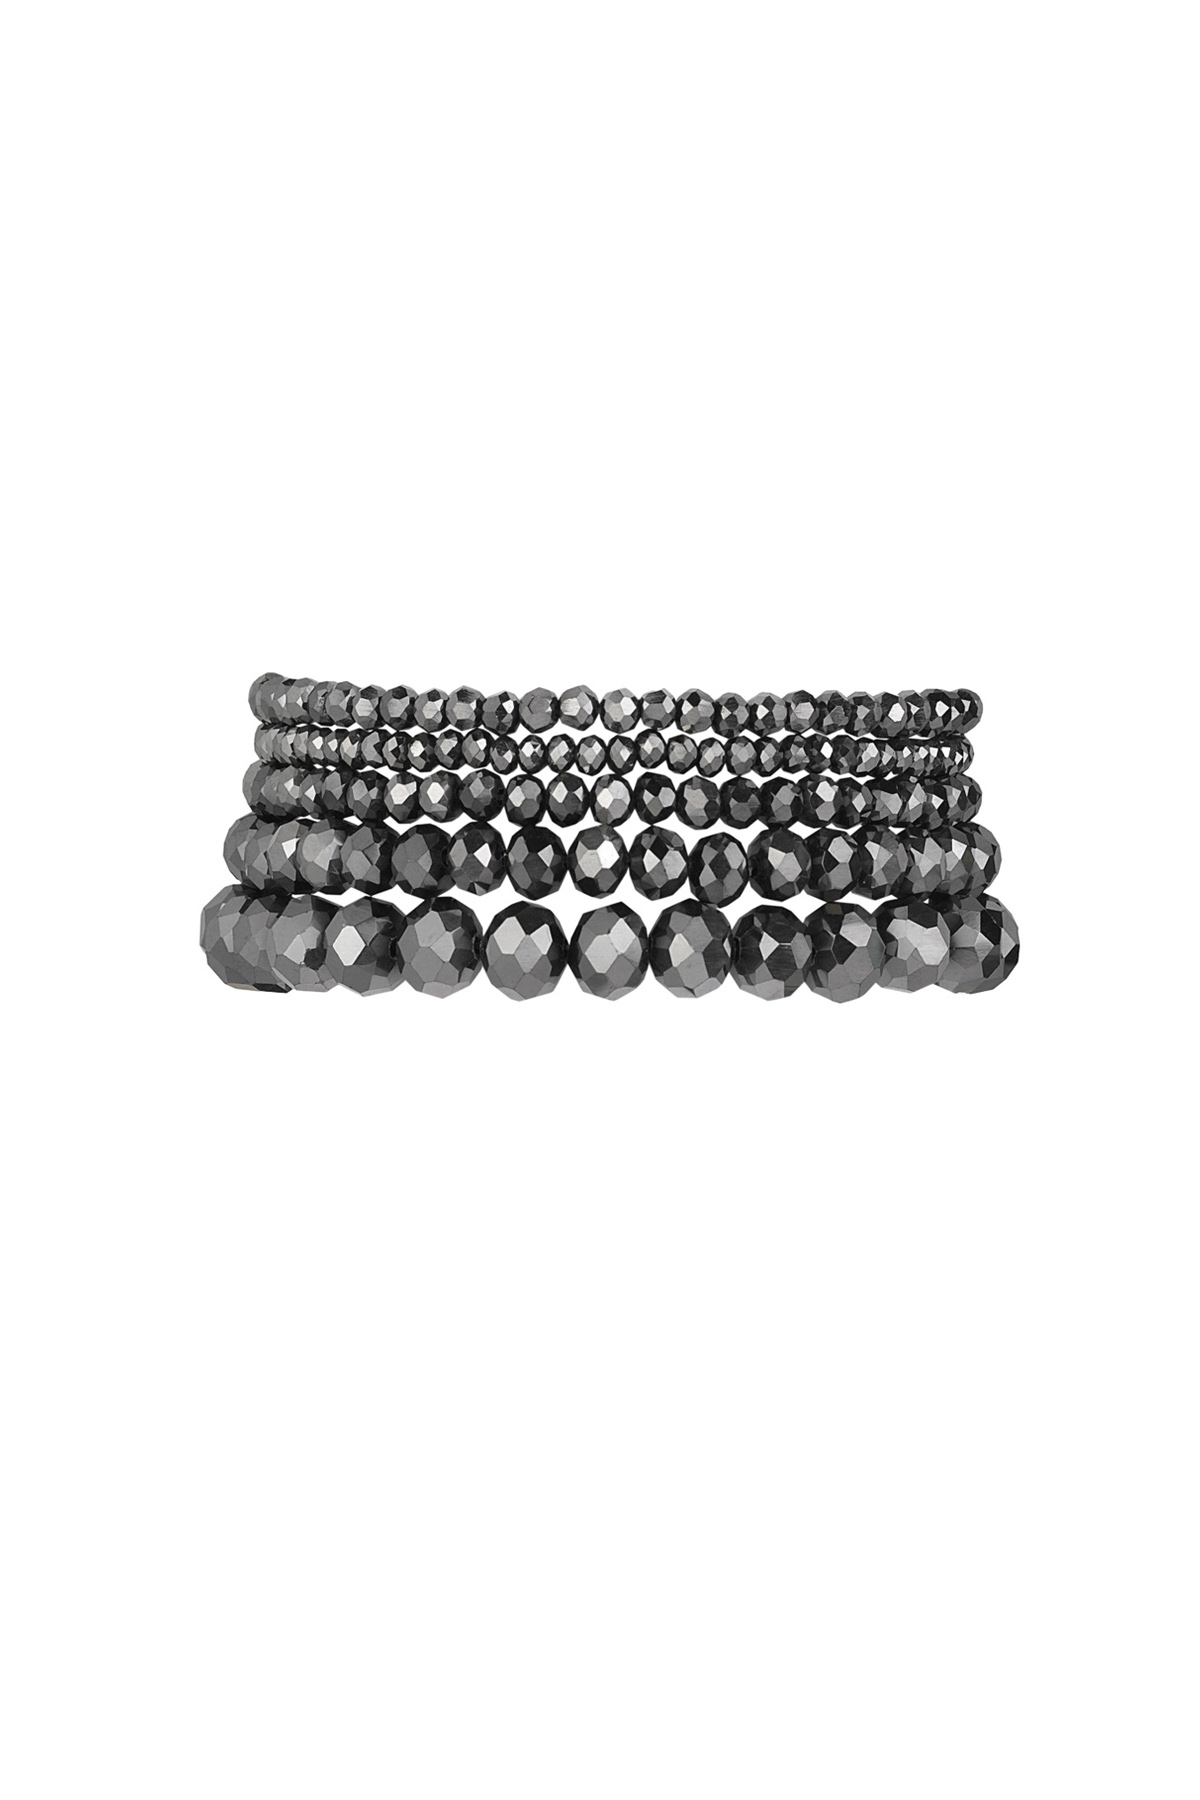 Set van 5 kristal armbanden grijs - donkergrijs 